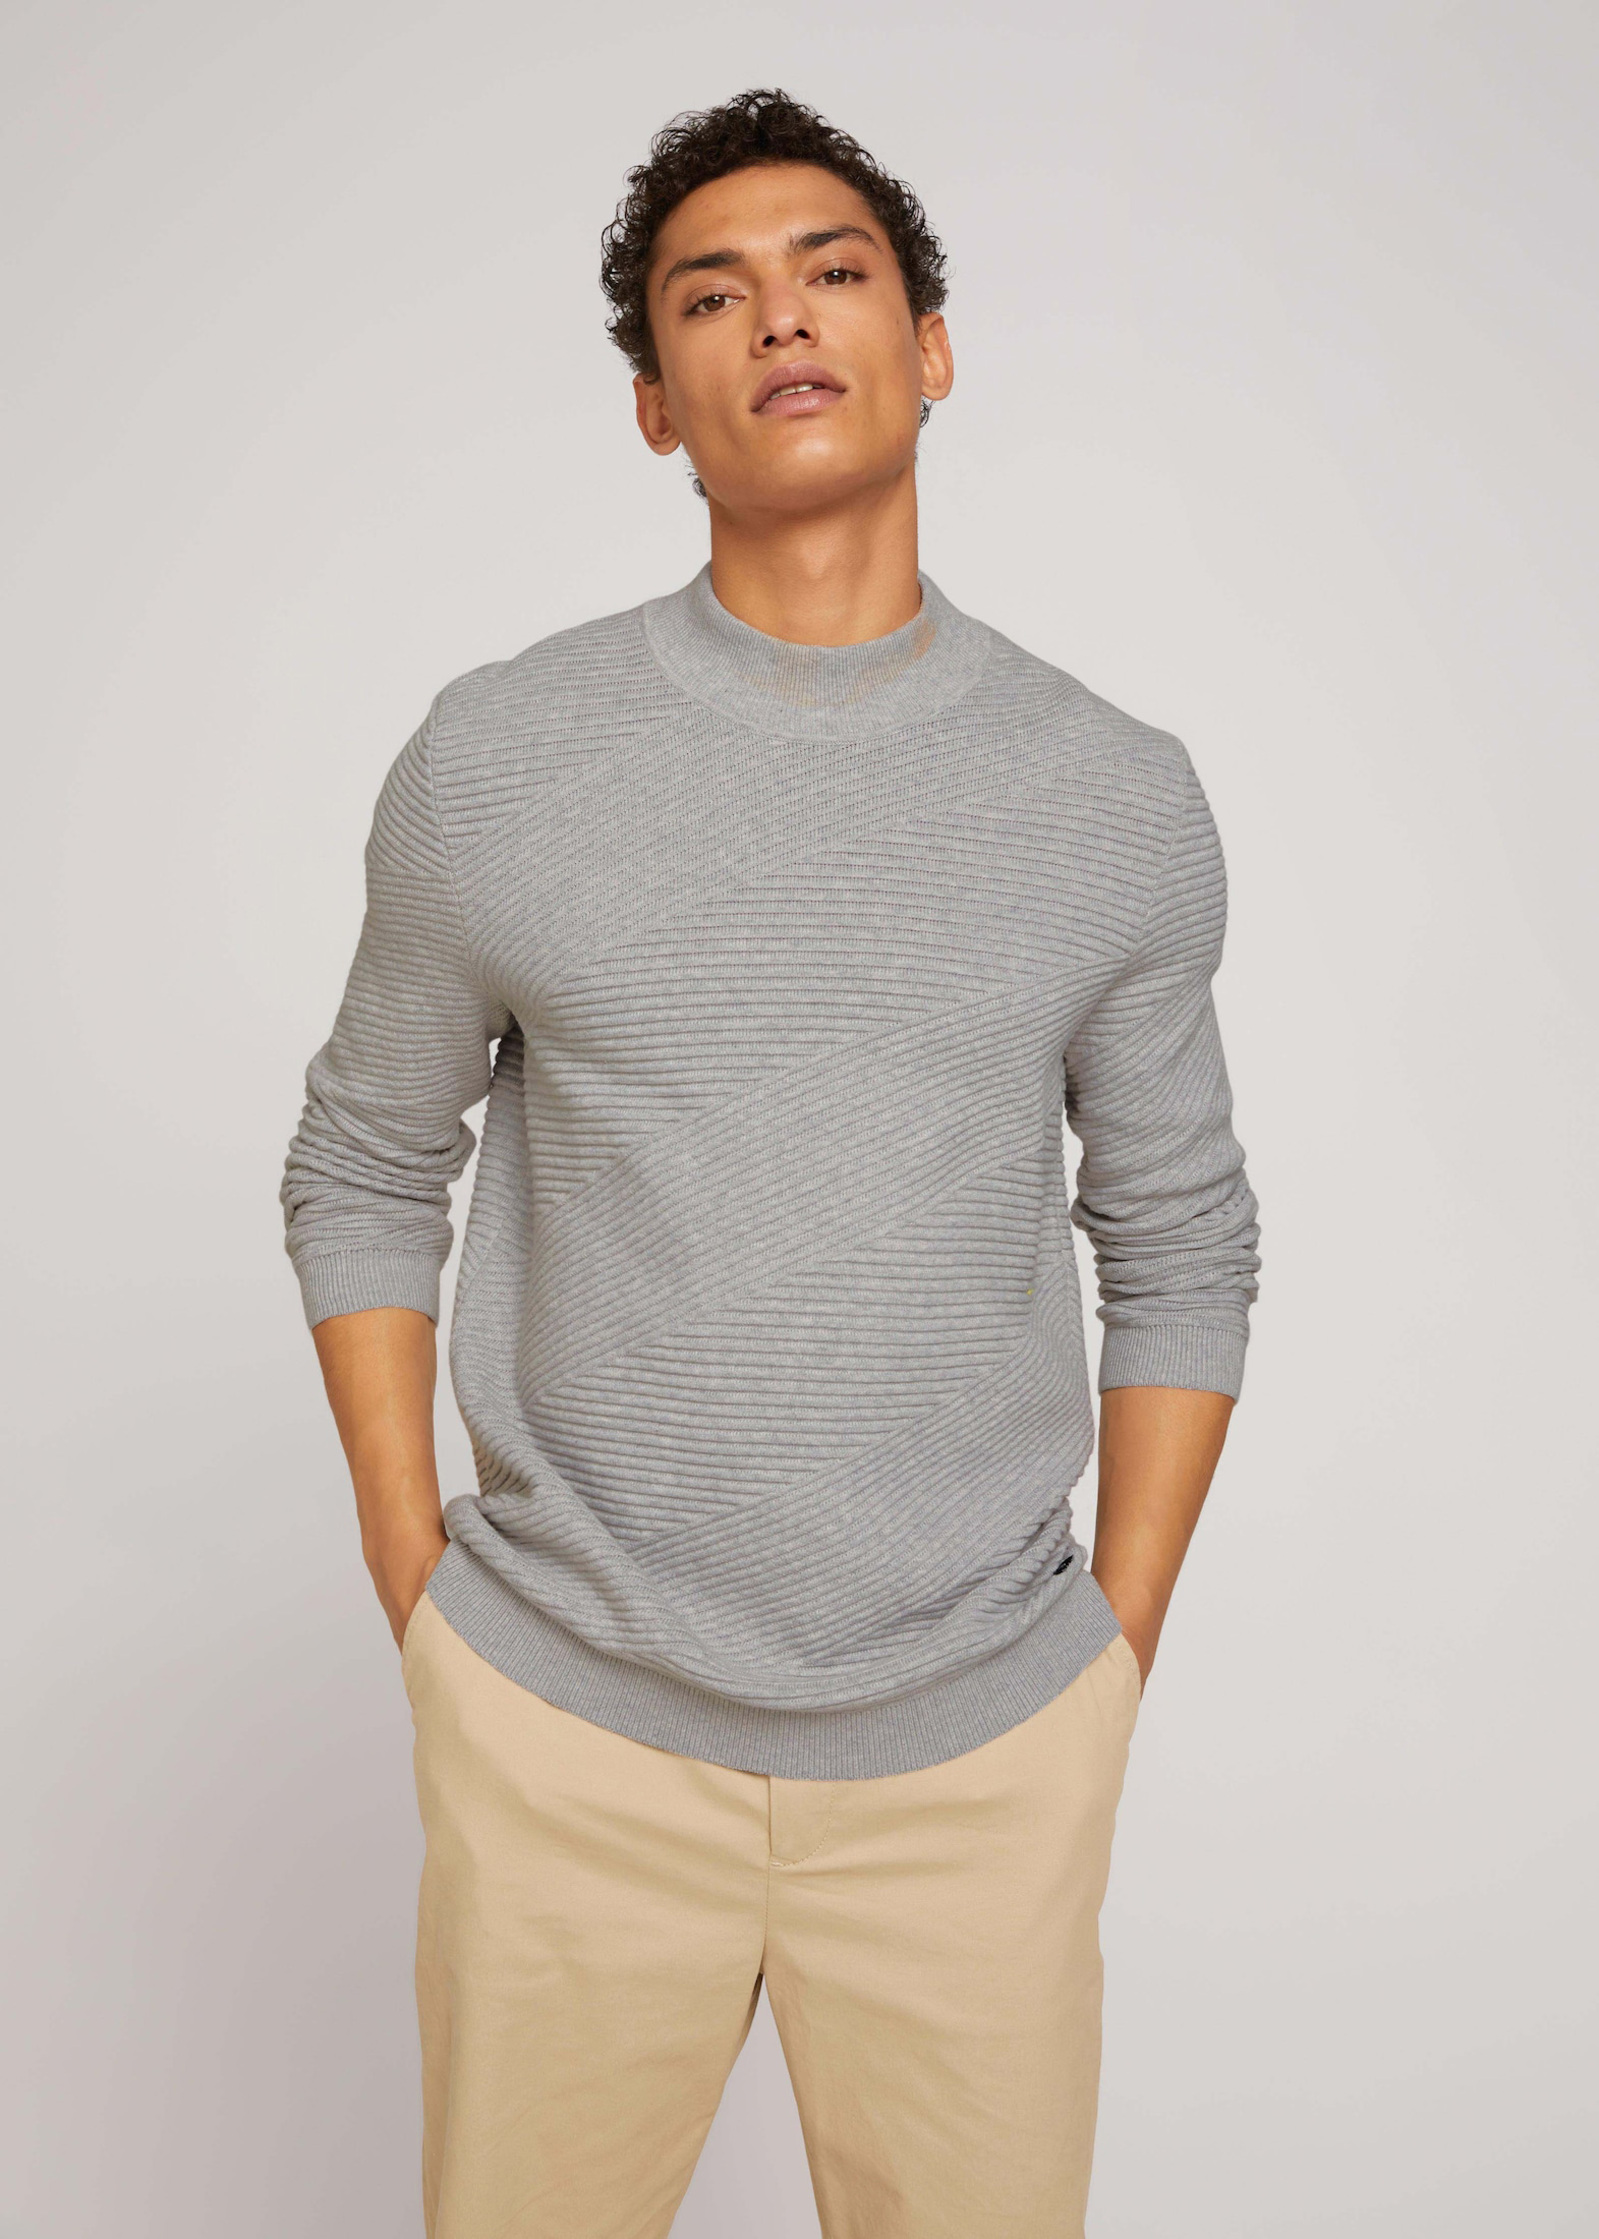 Tom Tailor® Geometric - Structured Light Stone Sweater Melange Grey XL Size